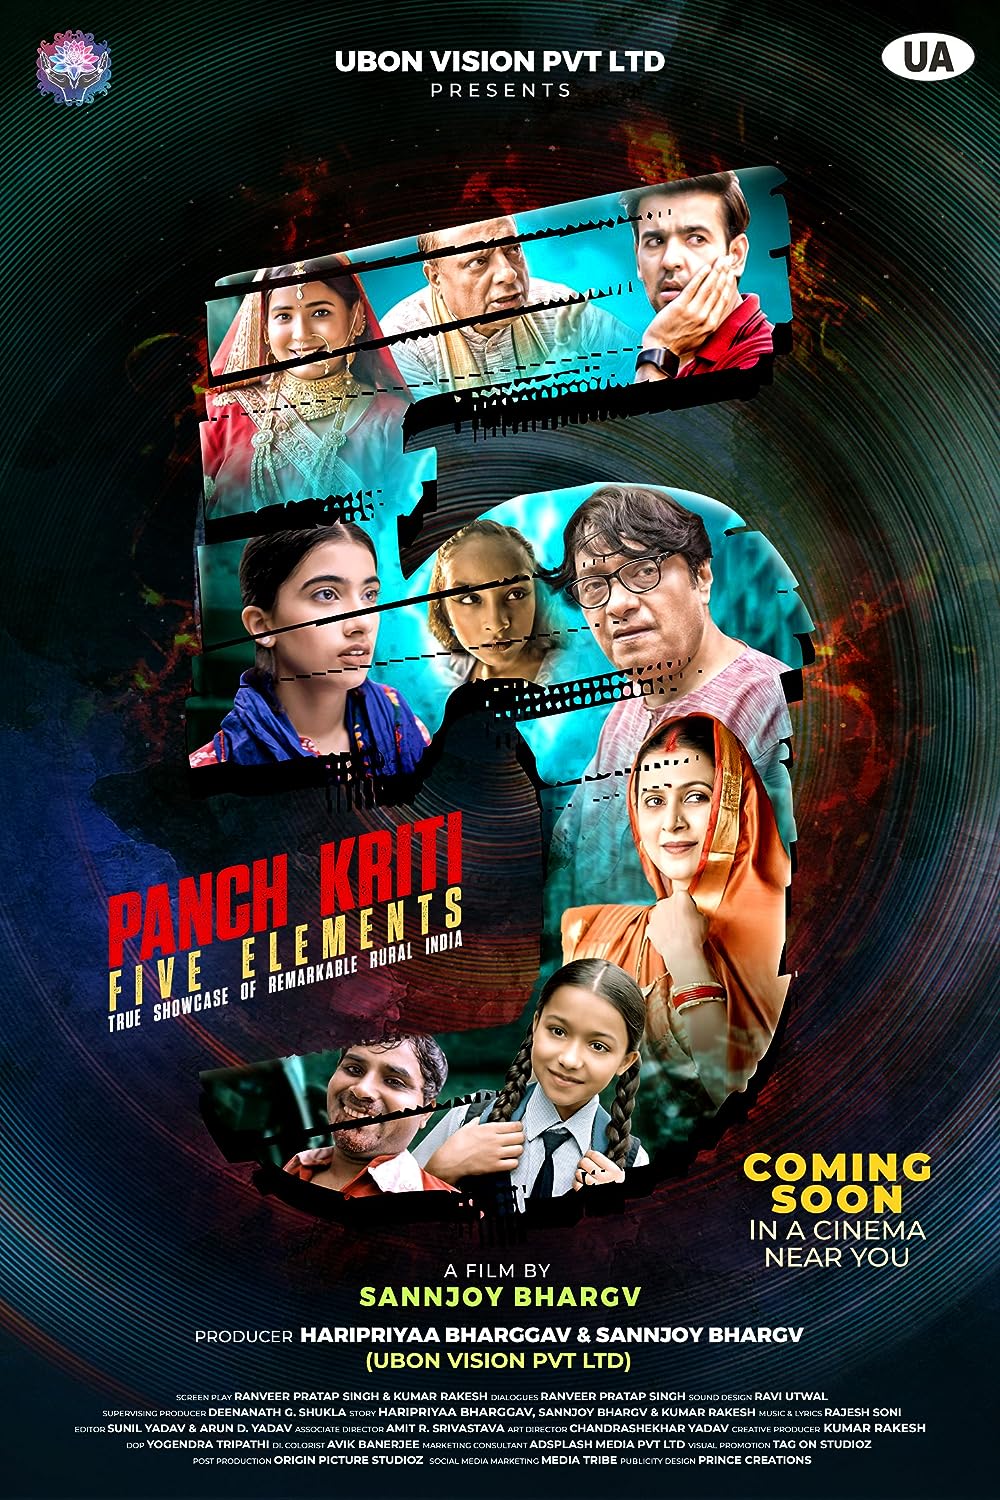 Panch Kriti Five Elements Movie Review